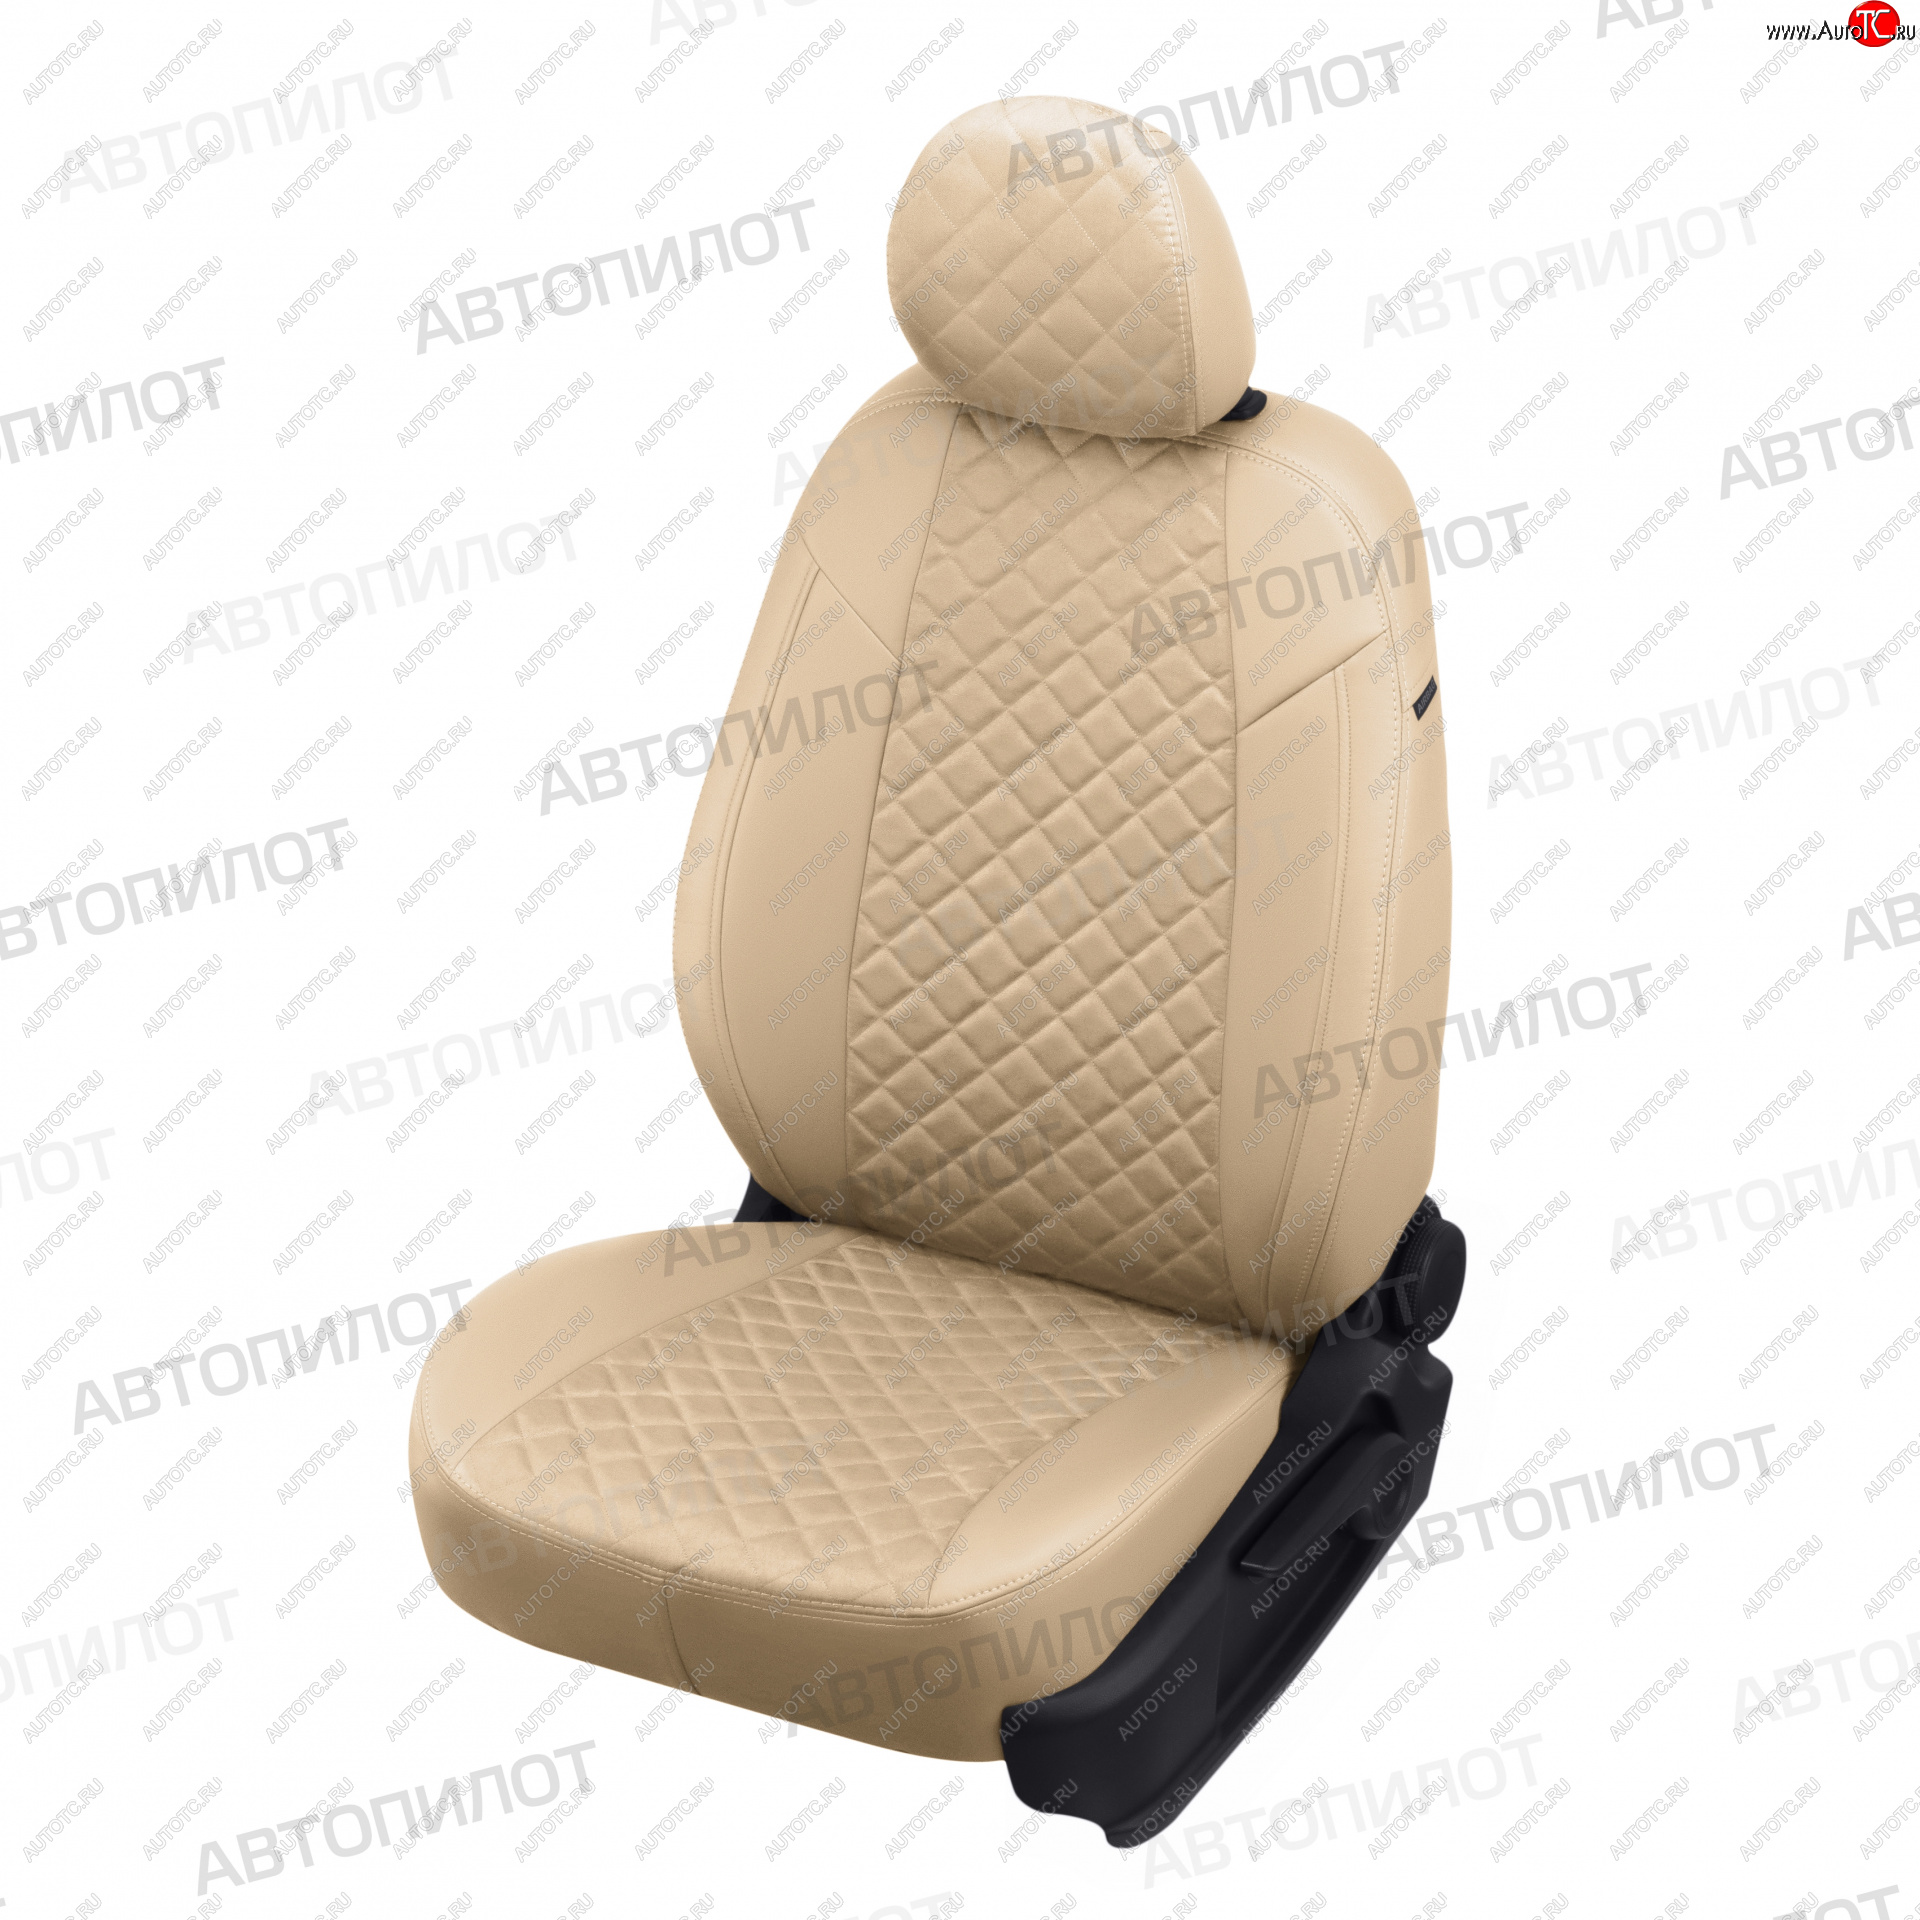 7 799 р. Чехлы сидений (экокожа/алькантара) Автопилот Ромб Chevrolet Lacetti универсал (2002-2013) (бежевый)